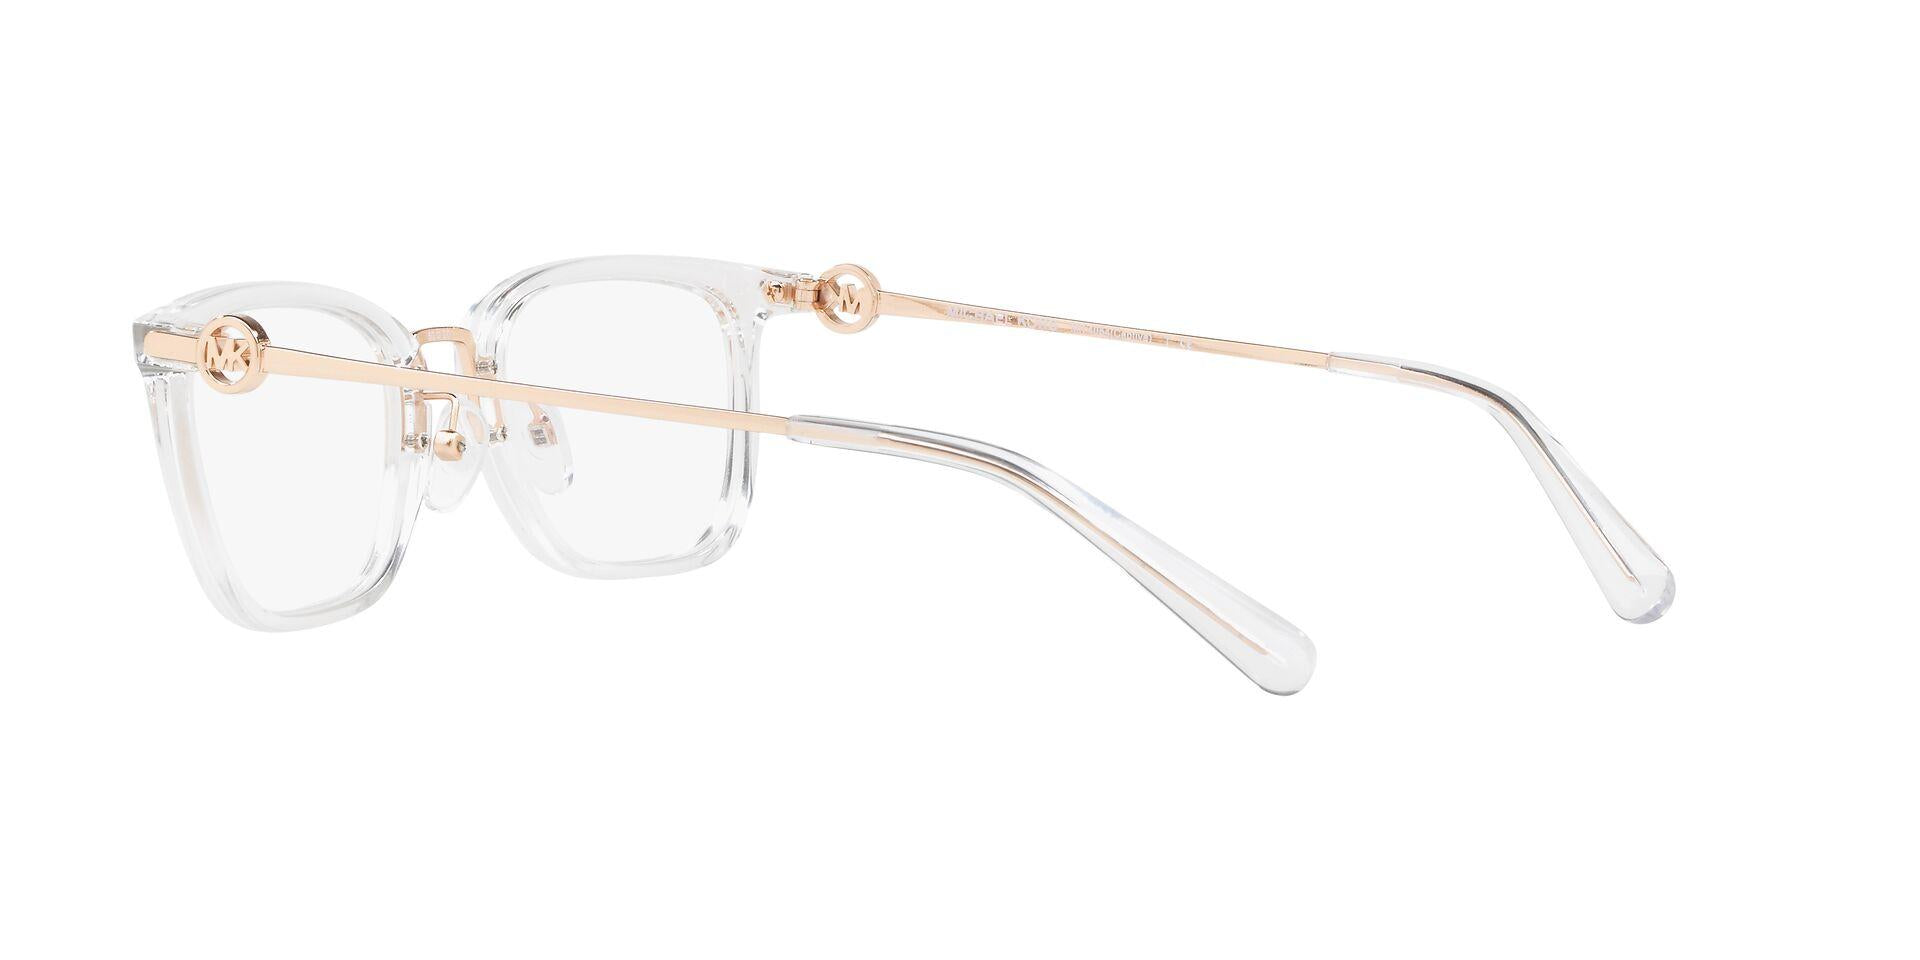 Michael Kors Captiva 4054 Eyeglasses Shadieware